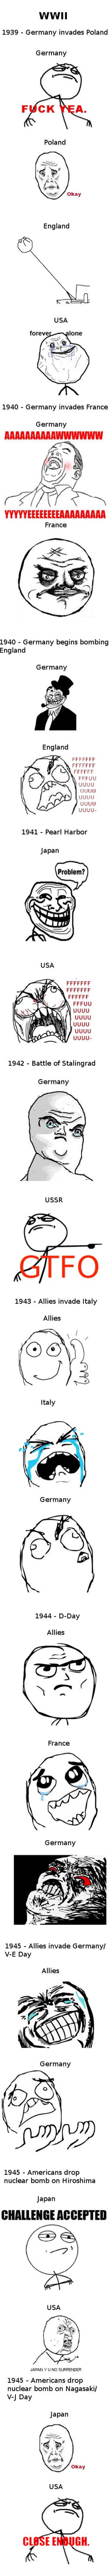 Explaining World War 2